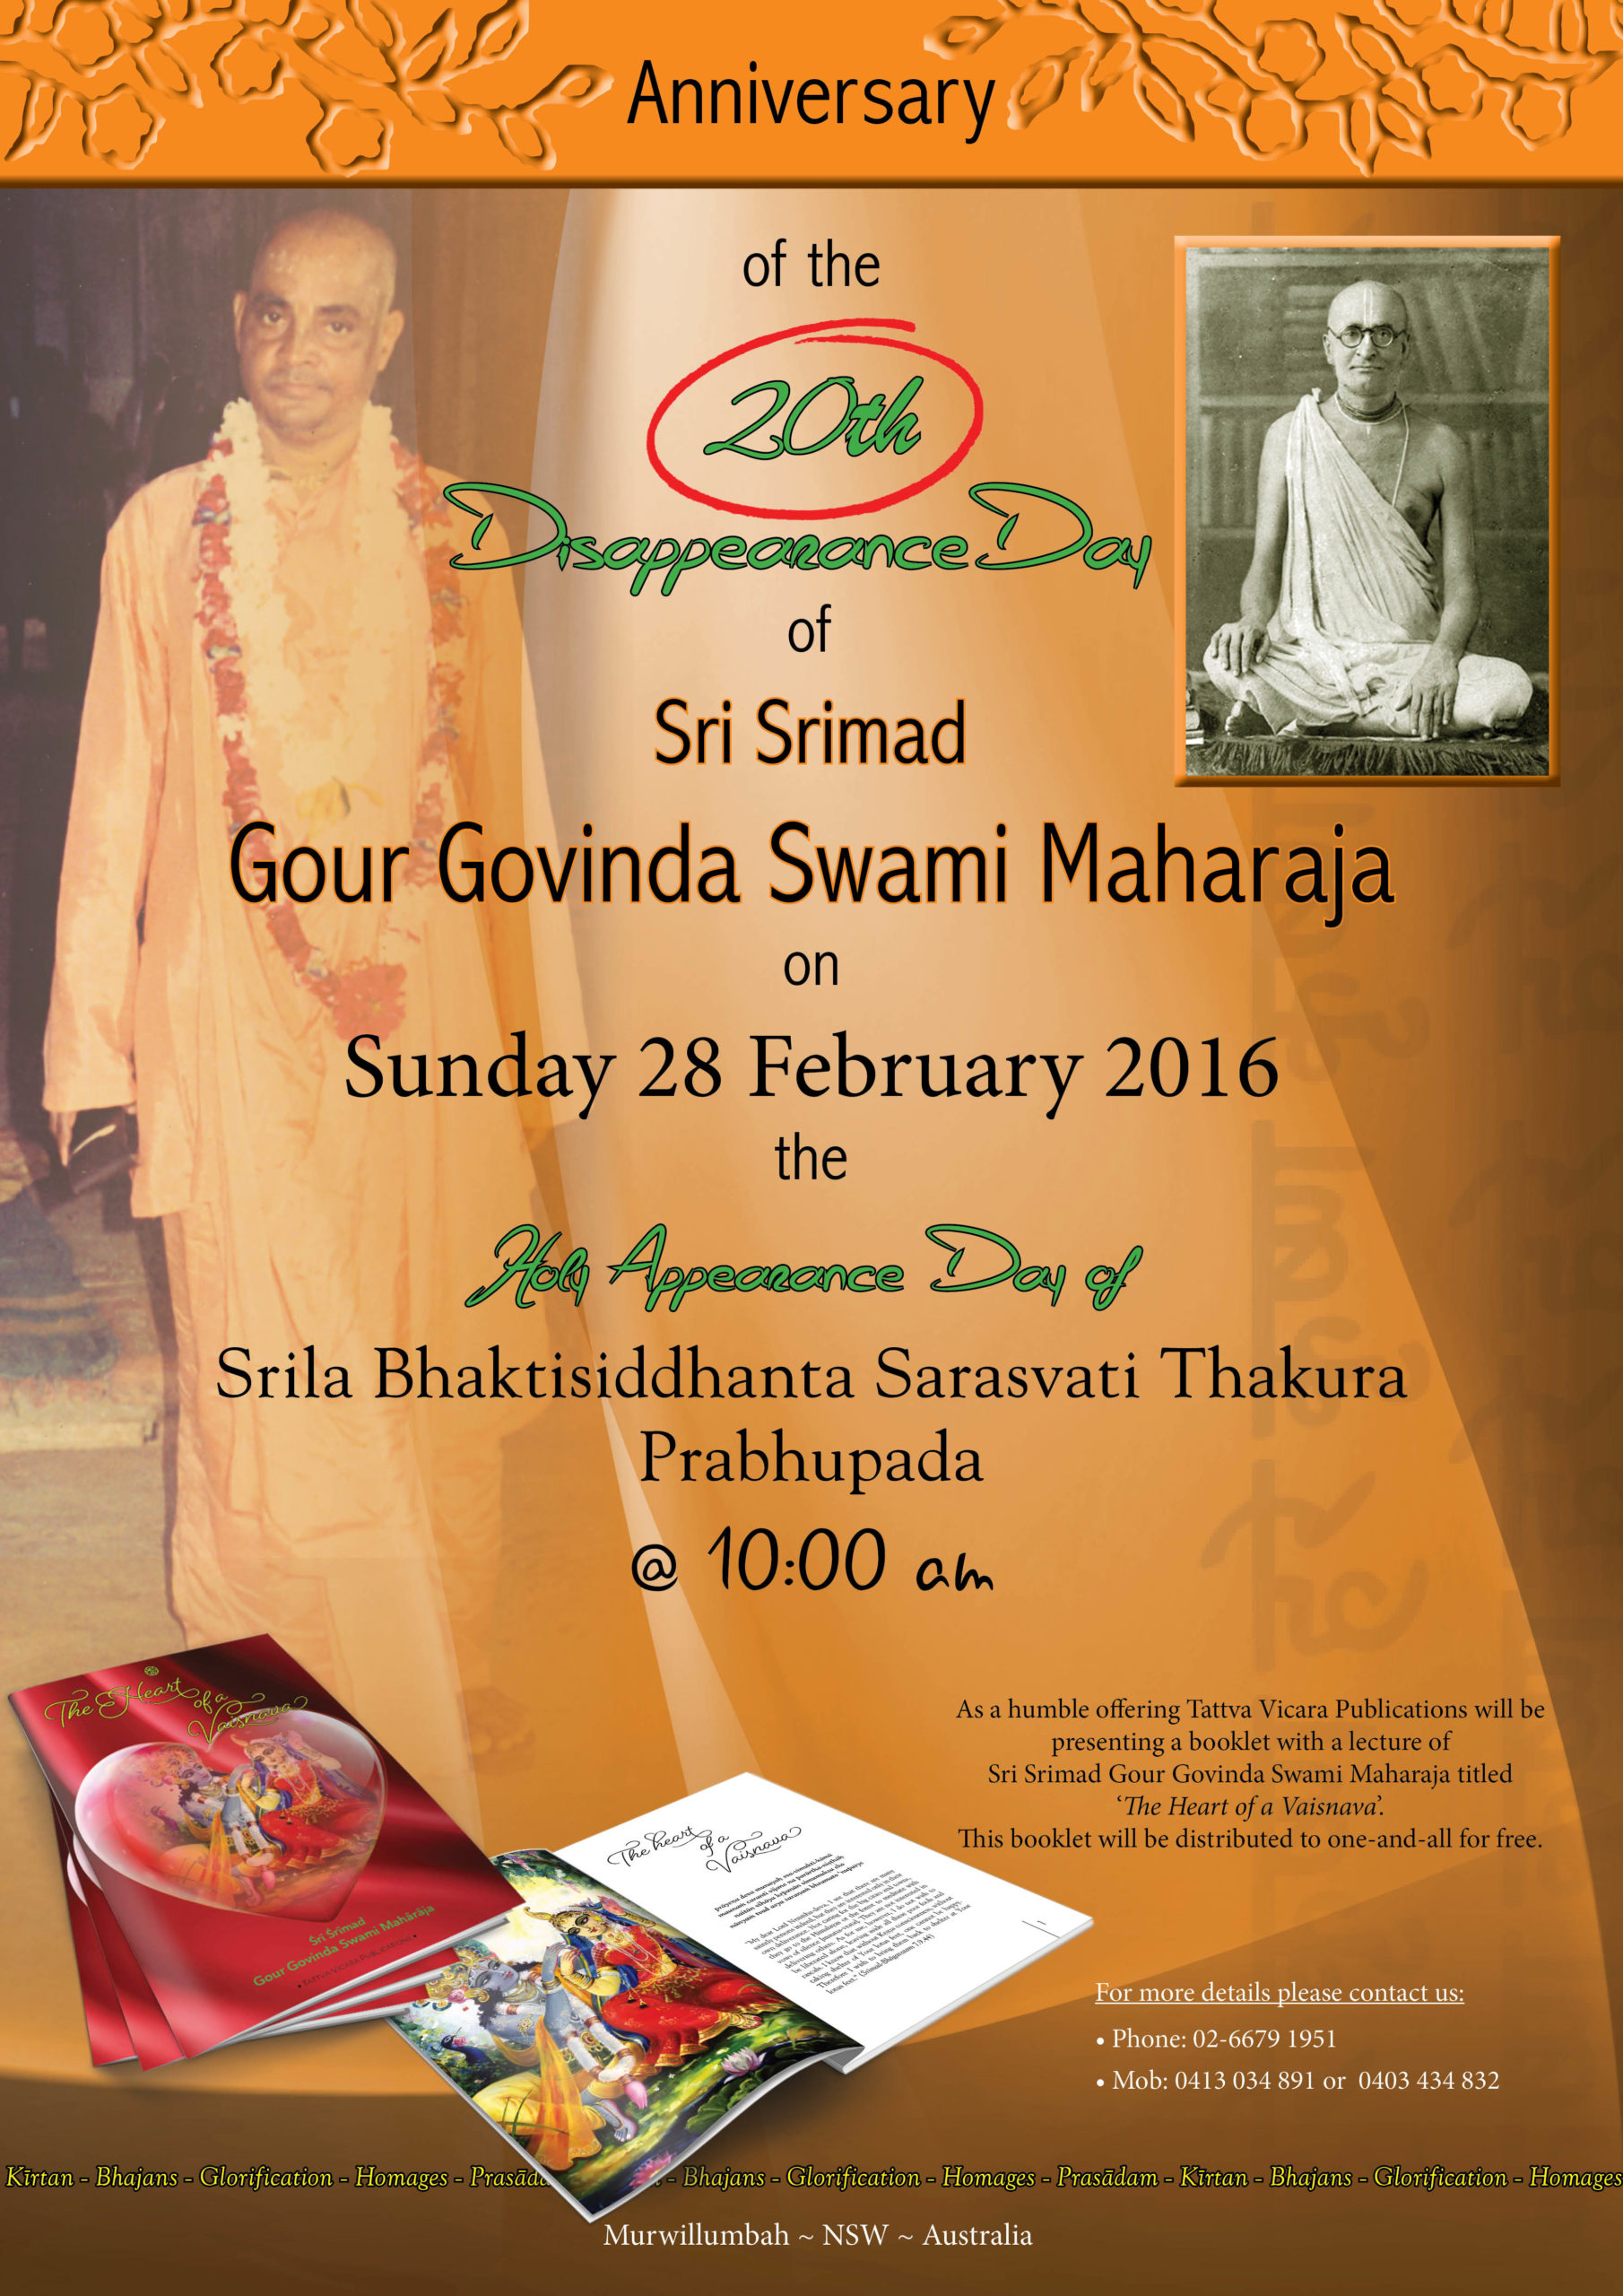 Gurudeva’s 20th Disappearance Day Festival